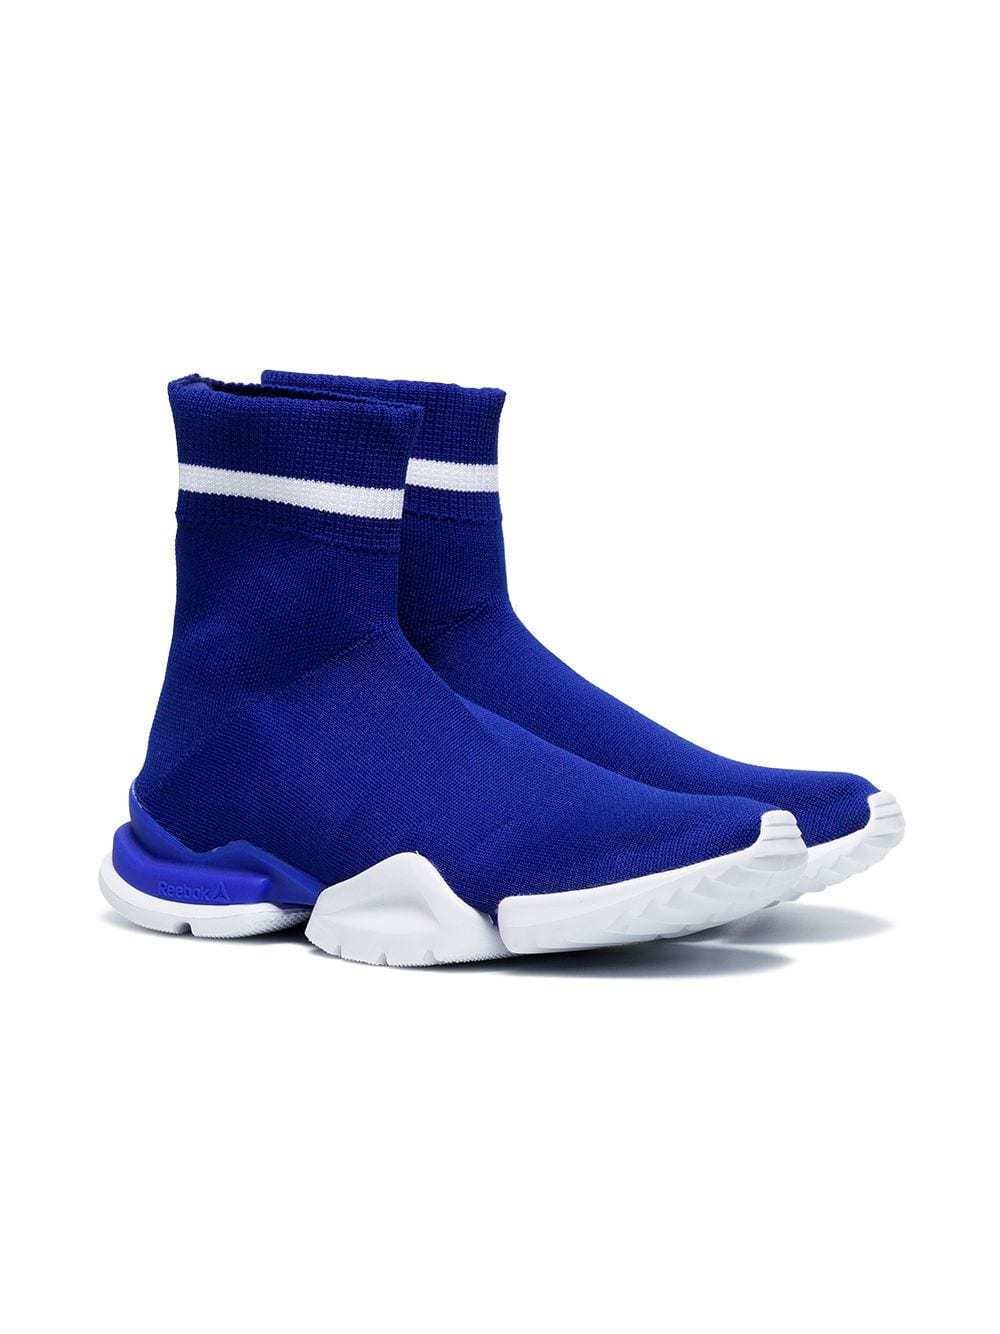 Reebok White And Blue Sock Runner Sneakers, $179 | farfetch.com |